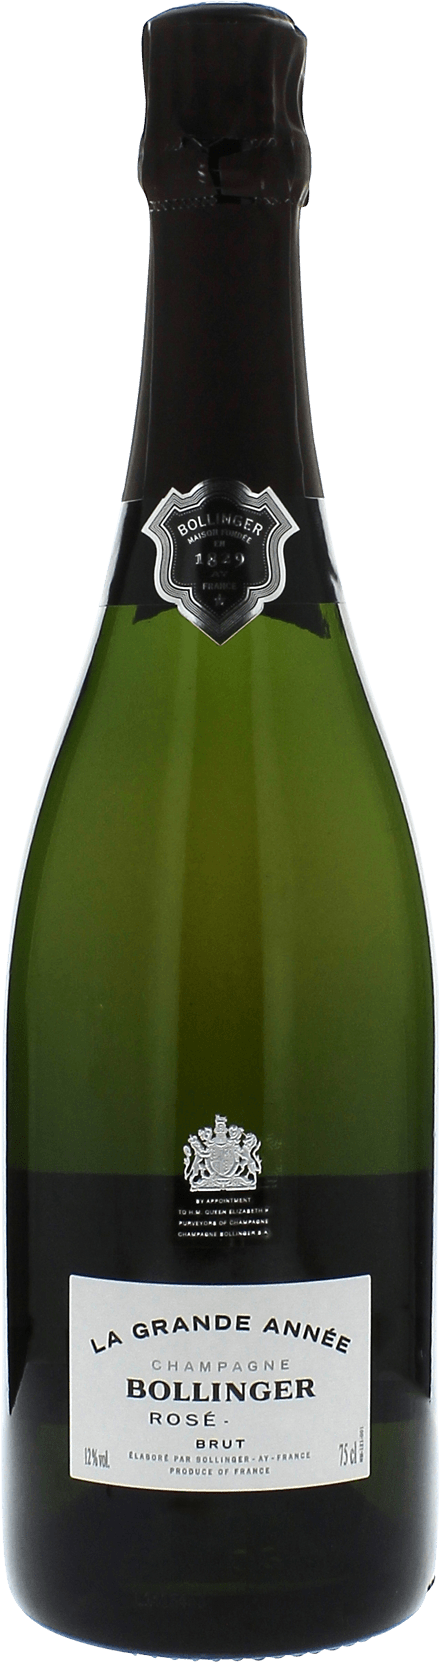 Bollinger grande anne ros 2012  Bollinger, Champagne